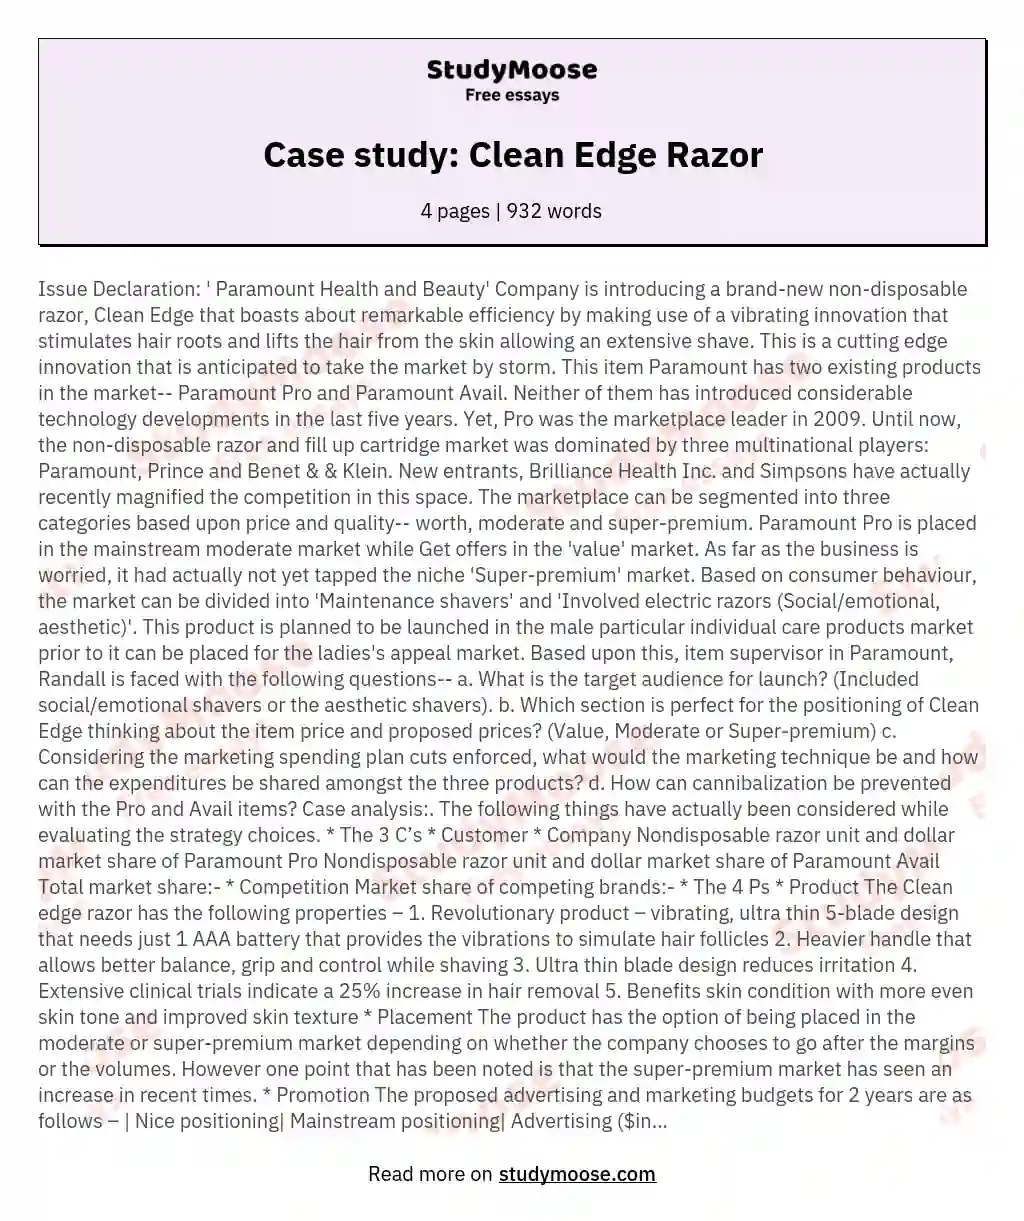 Case study: Clean Edge Razor essay